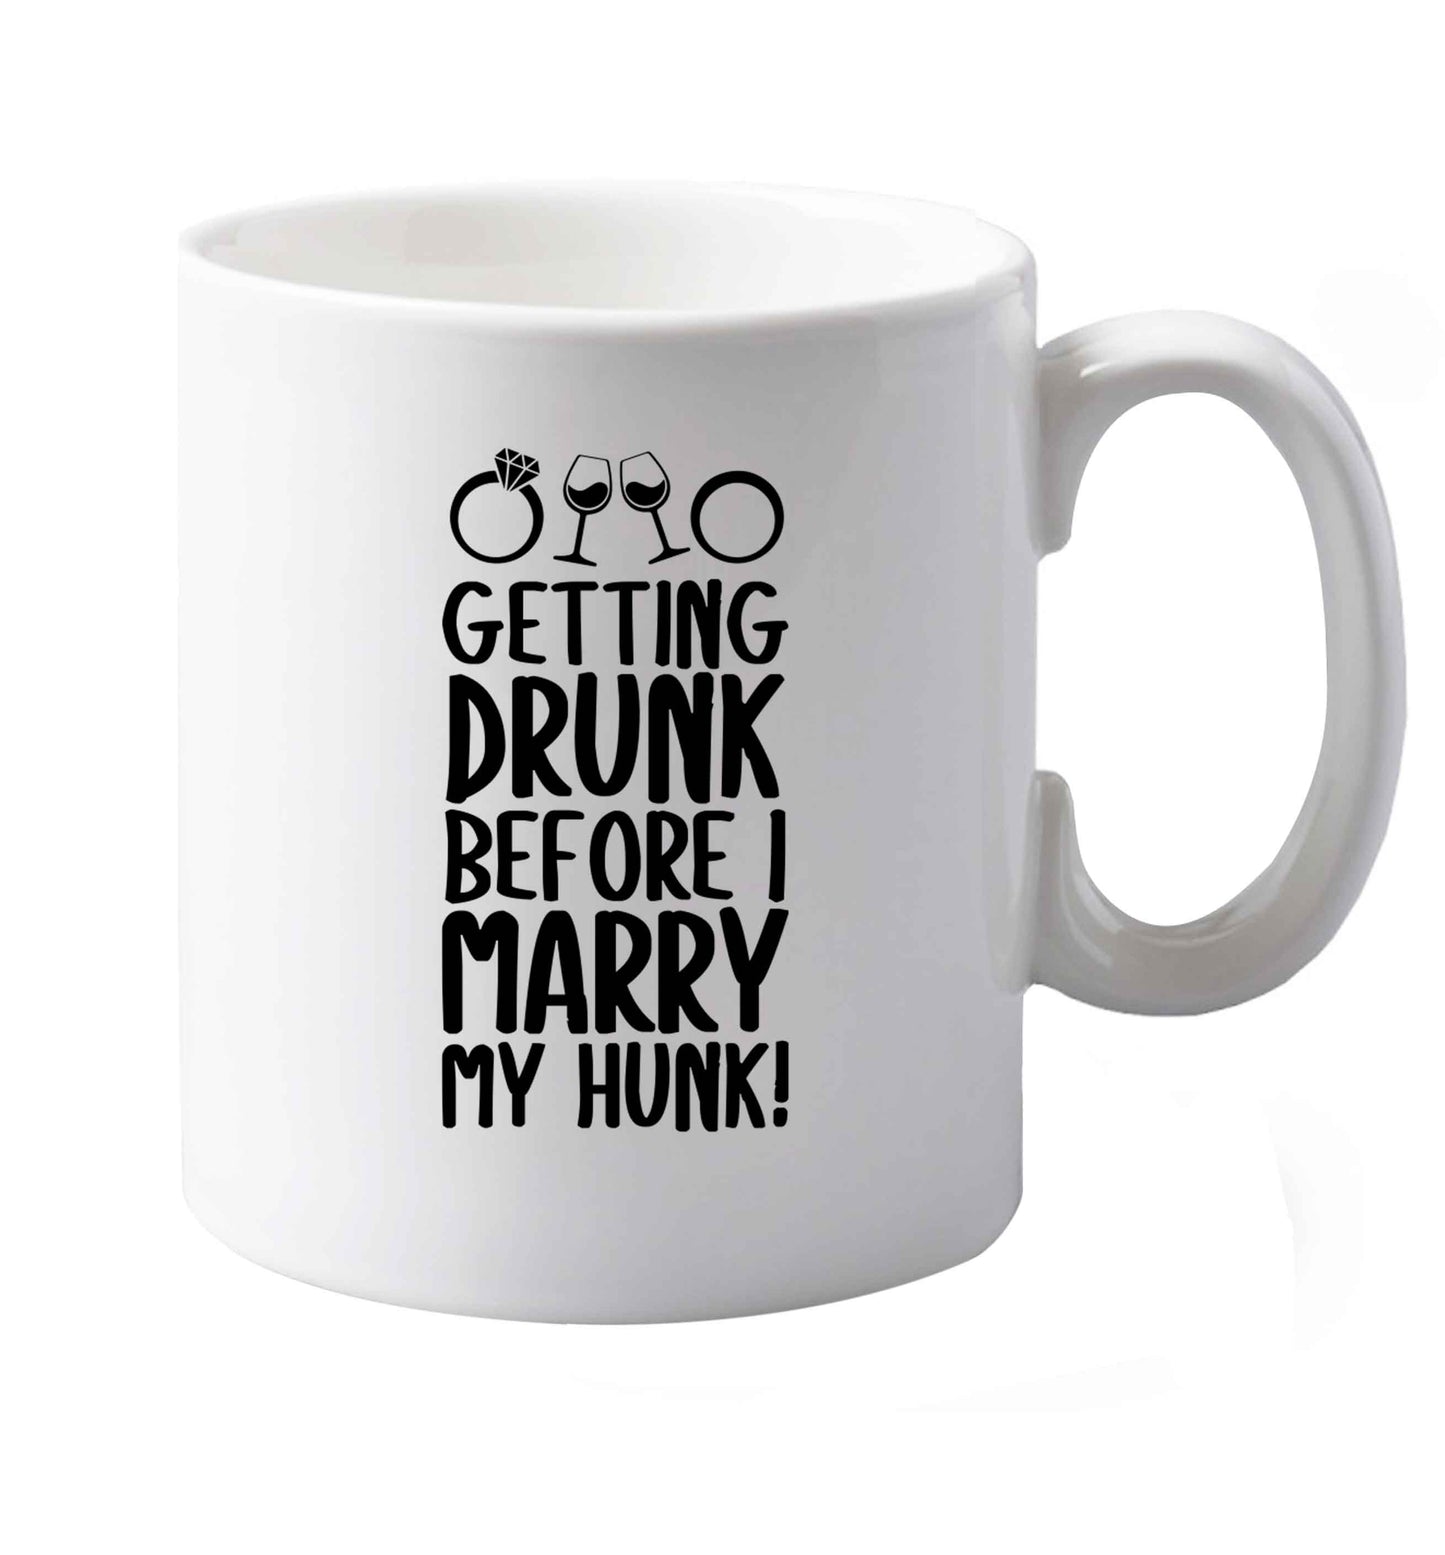 10 oz Getting drunk before I marry my hunk   ceramic mug both sides